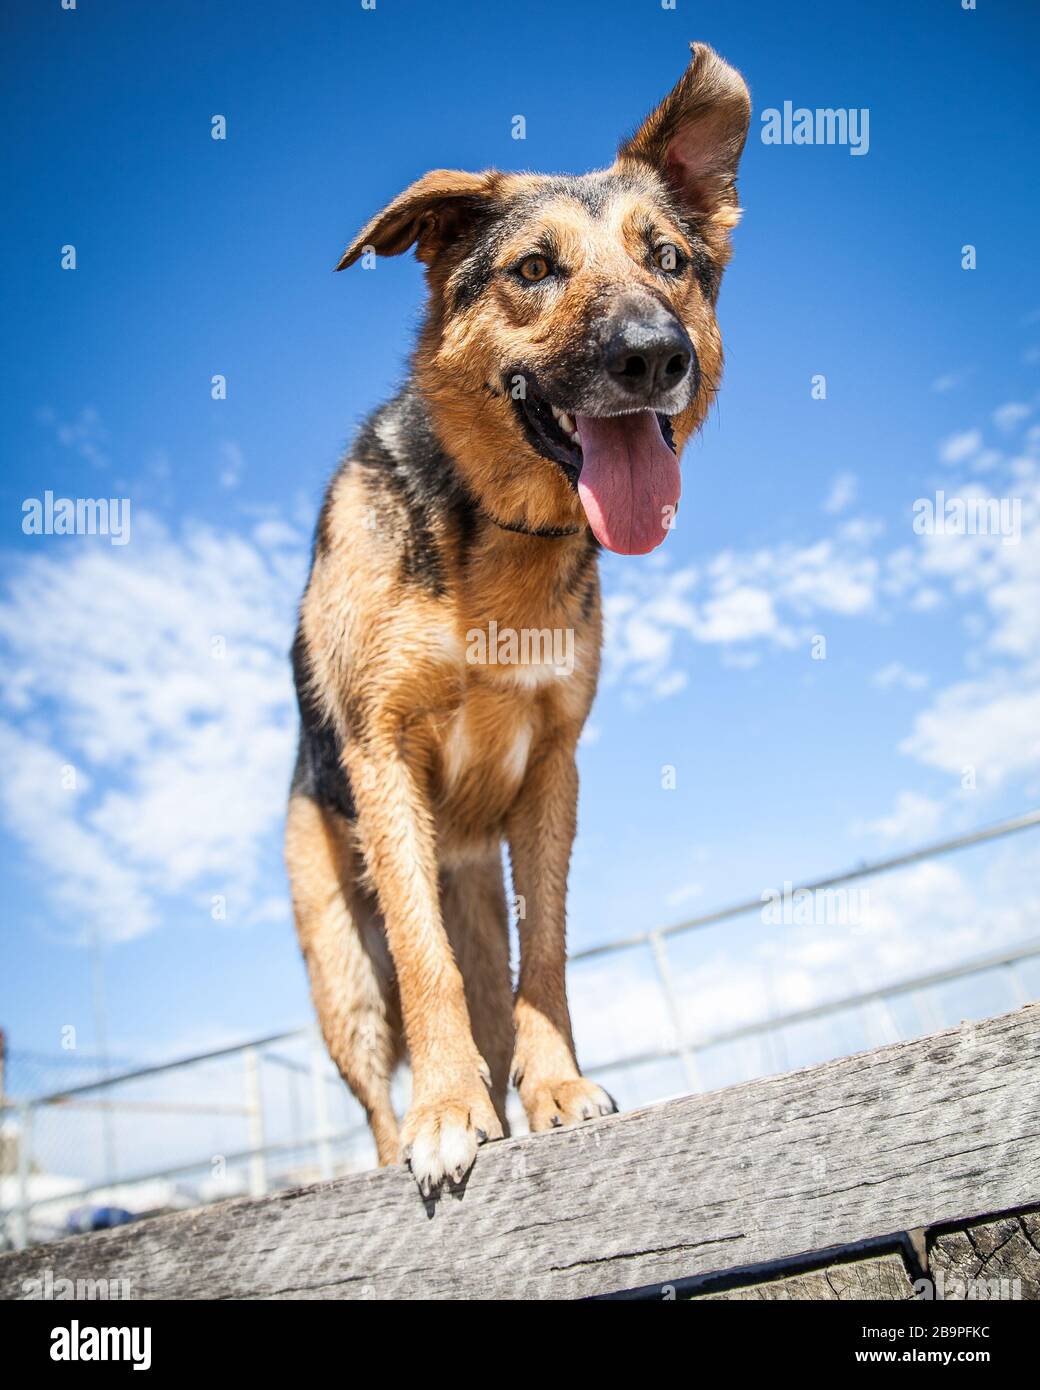 Mixed australian shepherd dog hi-res stock photography and images - Alamy